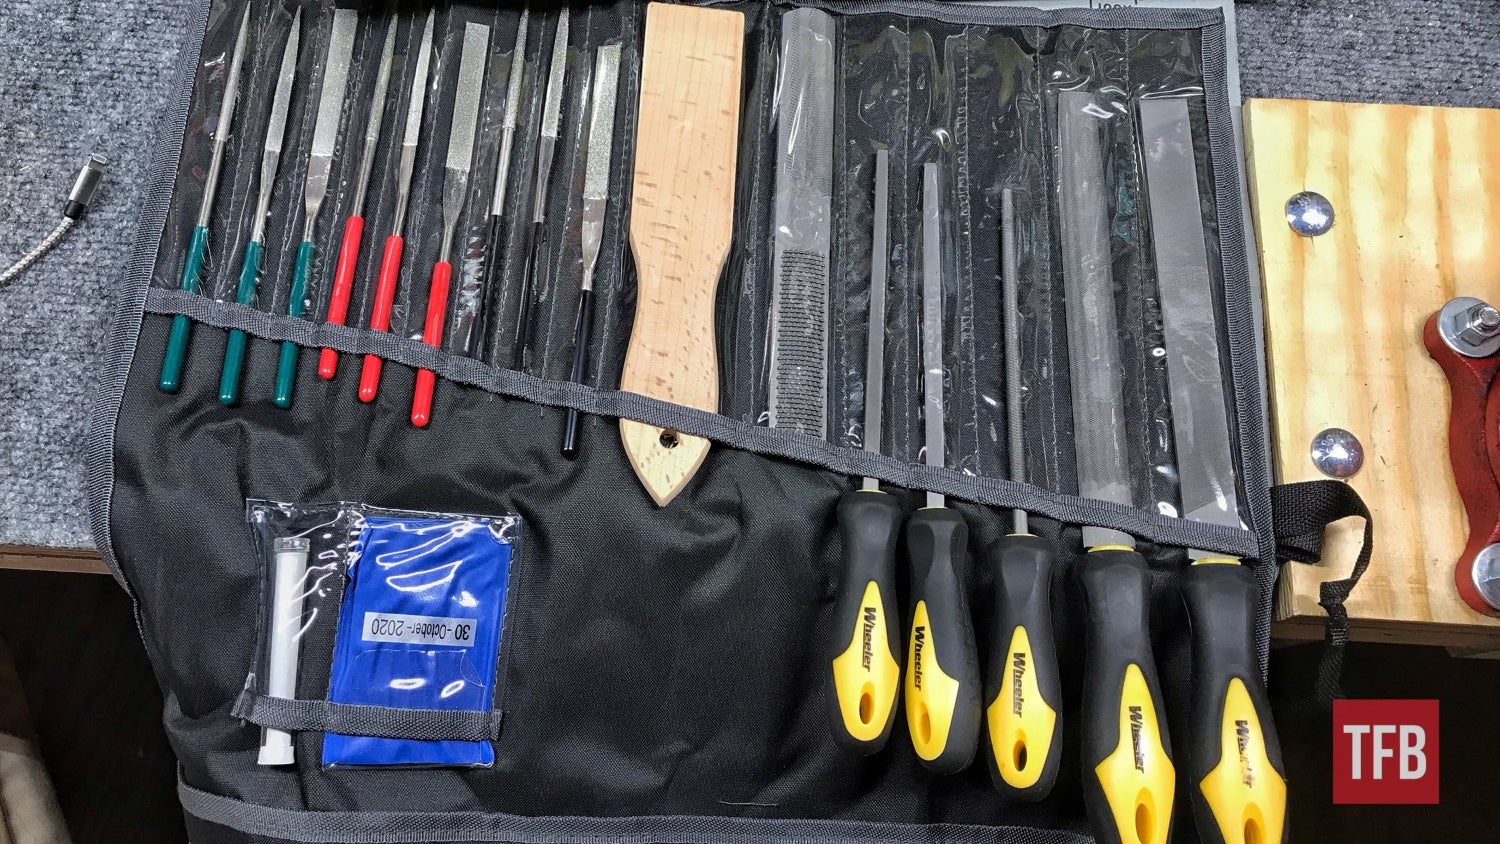 Details about   Redneck Convent RC Gunsmith File Set Tools 18 Pieces 